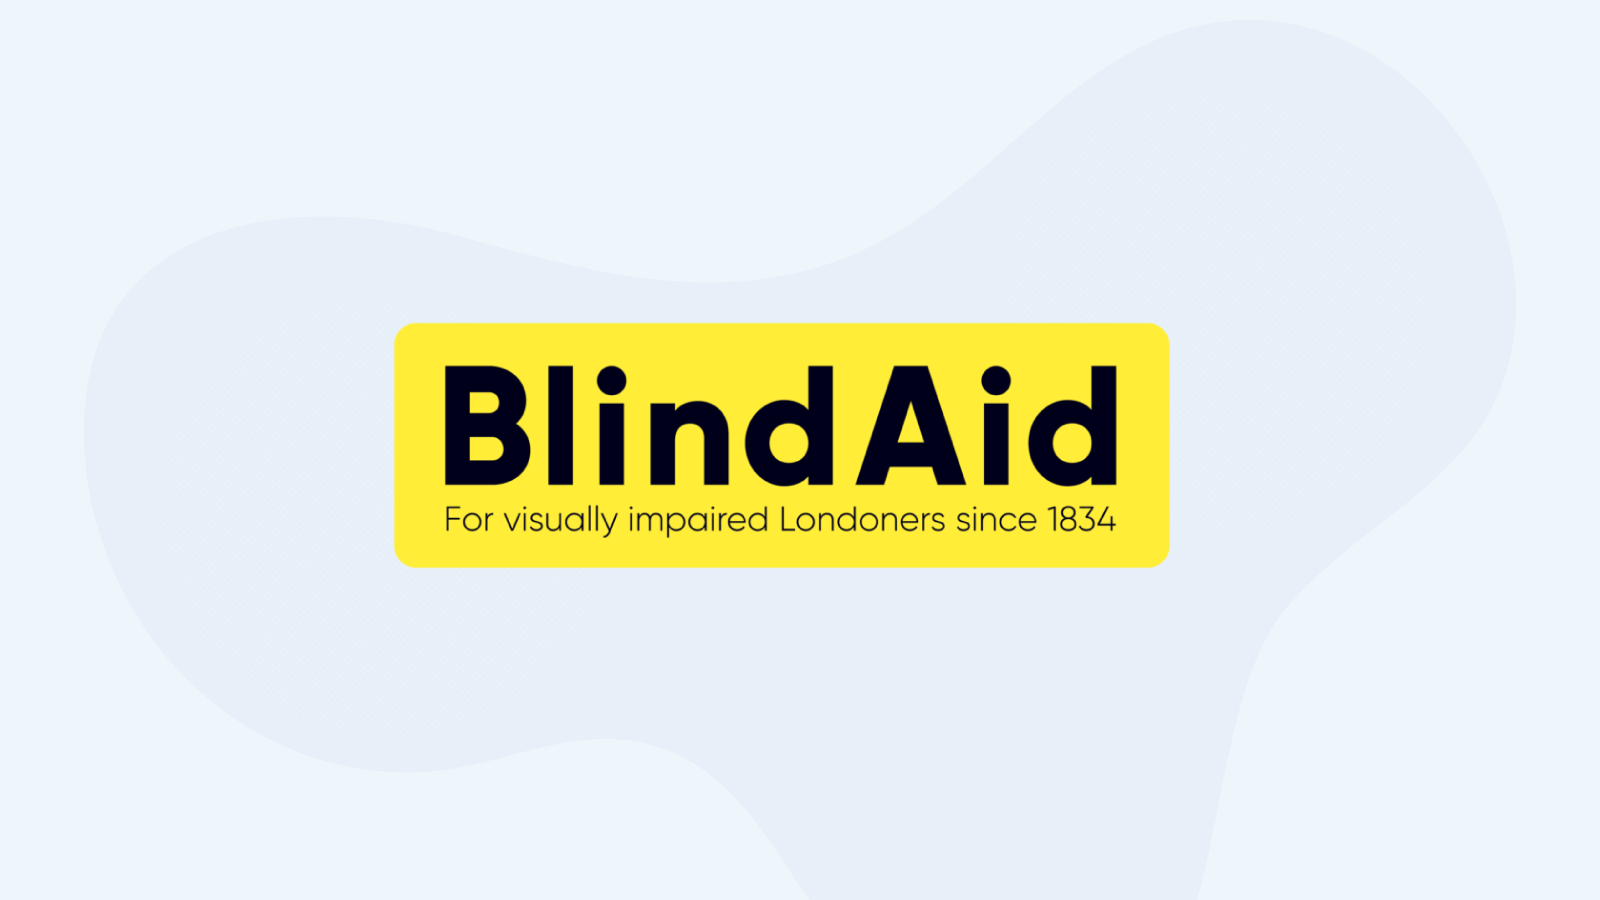 BlindAid charity